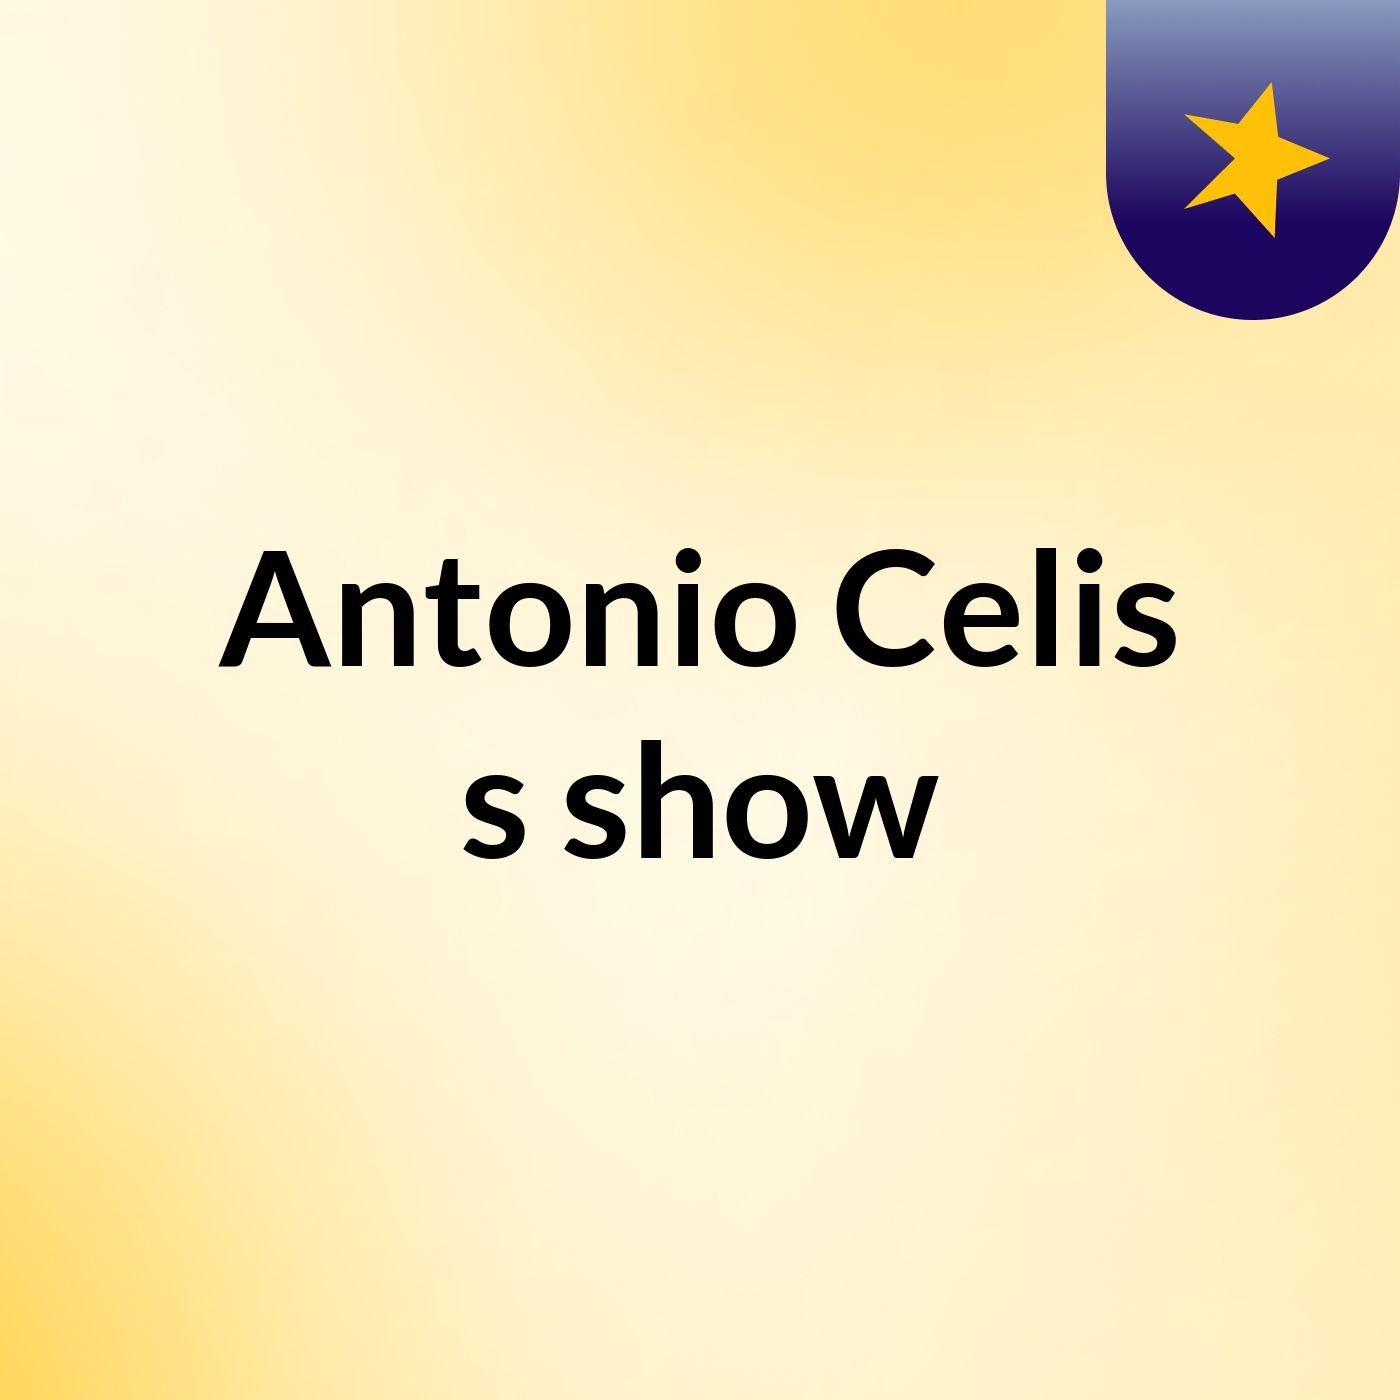 Antonio Celis's show